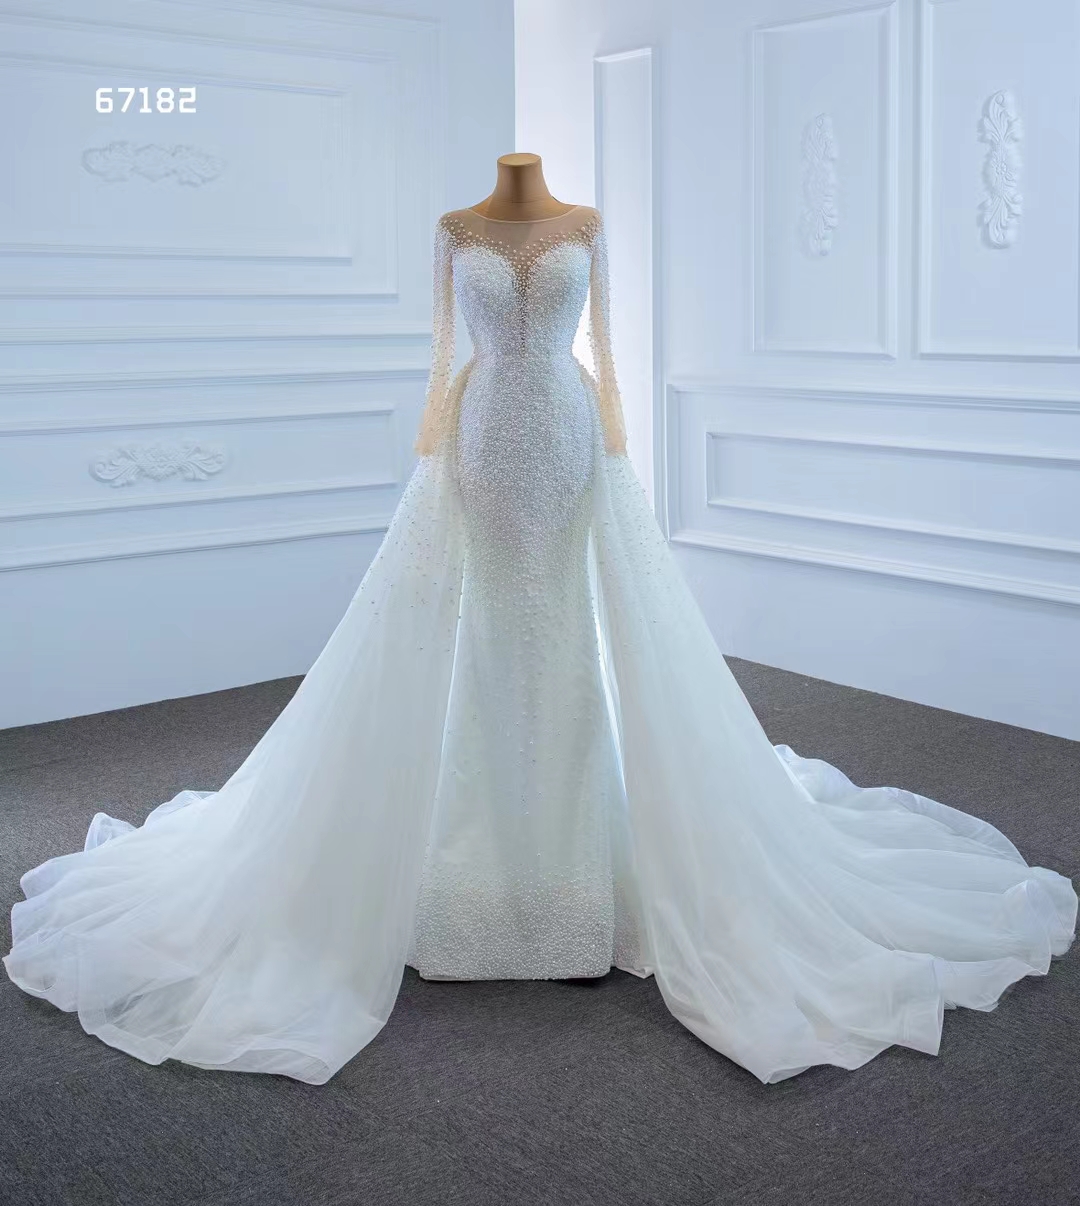 Prinzessin Long Sleeve Crystal Lace Mermaid Hochzeitskleid Robe de Mariage Elegant SM67182